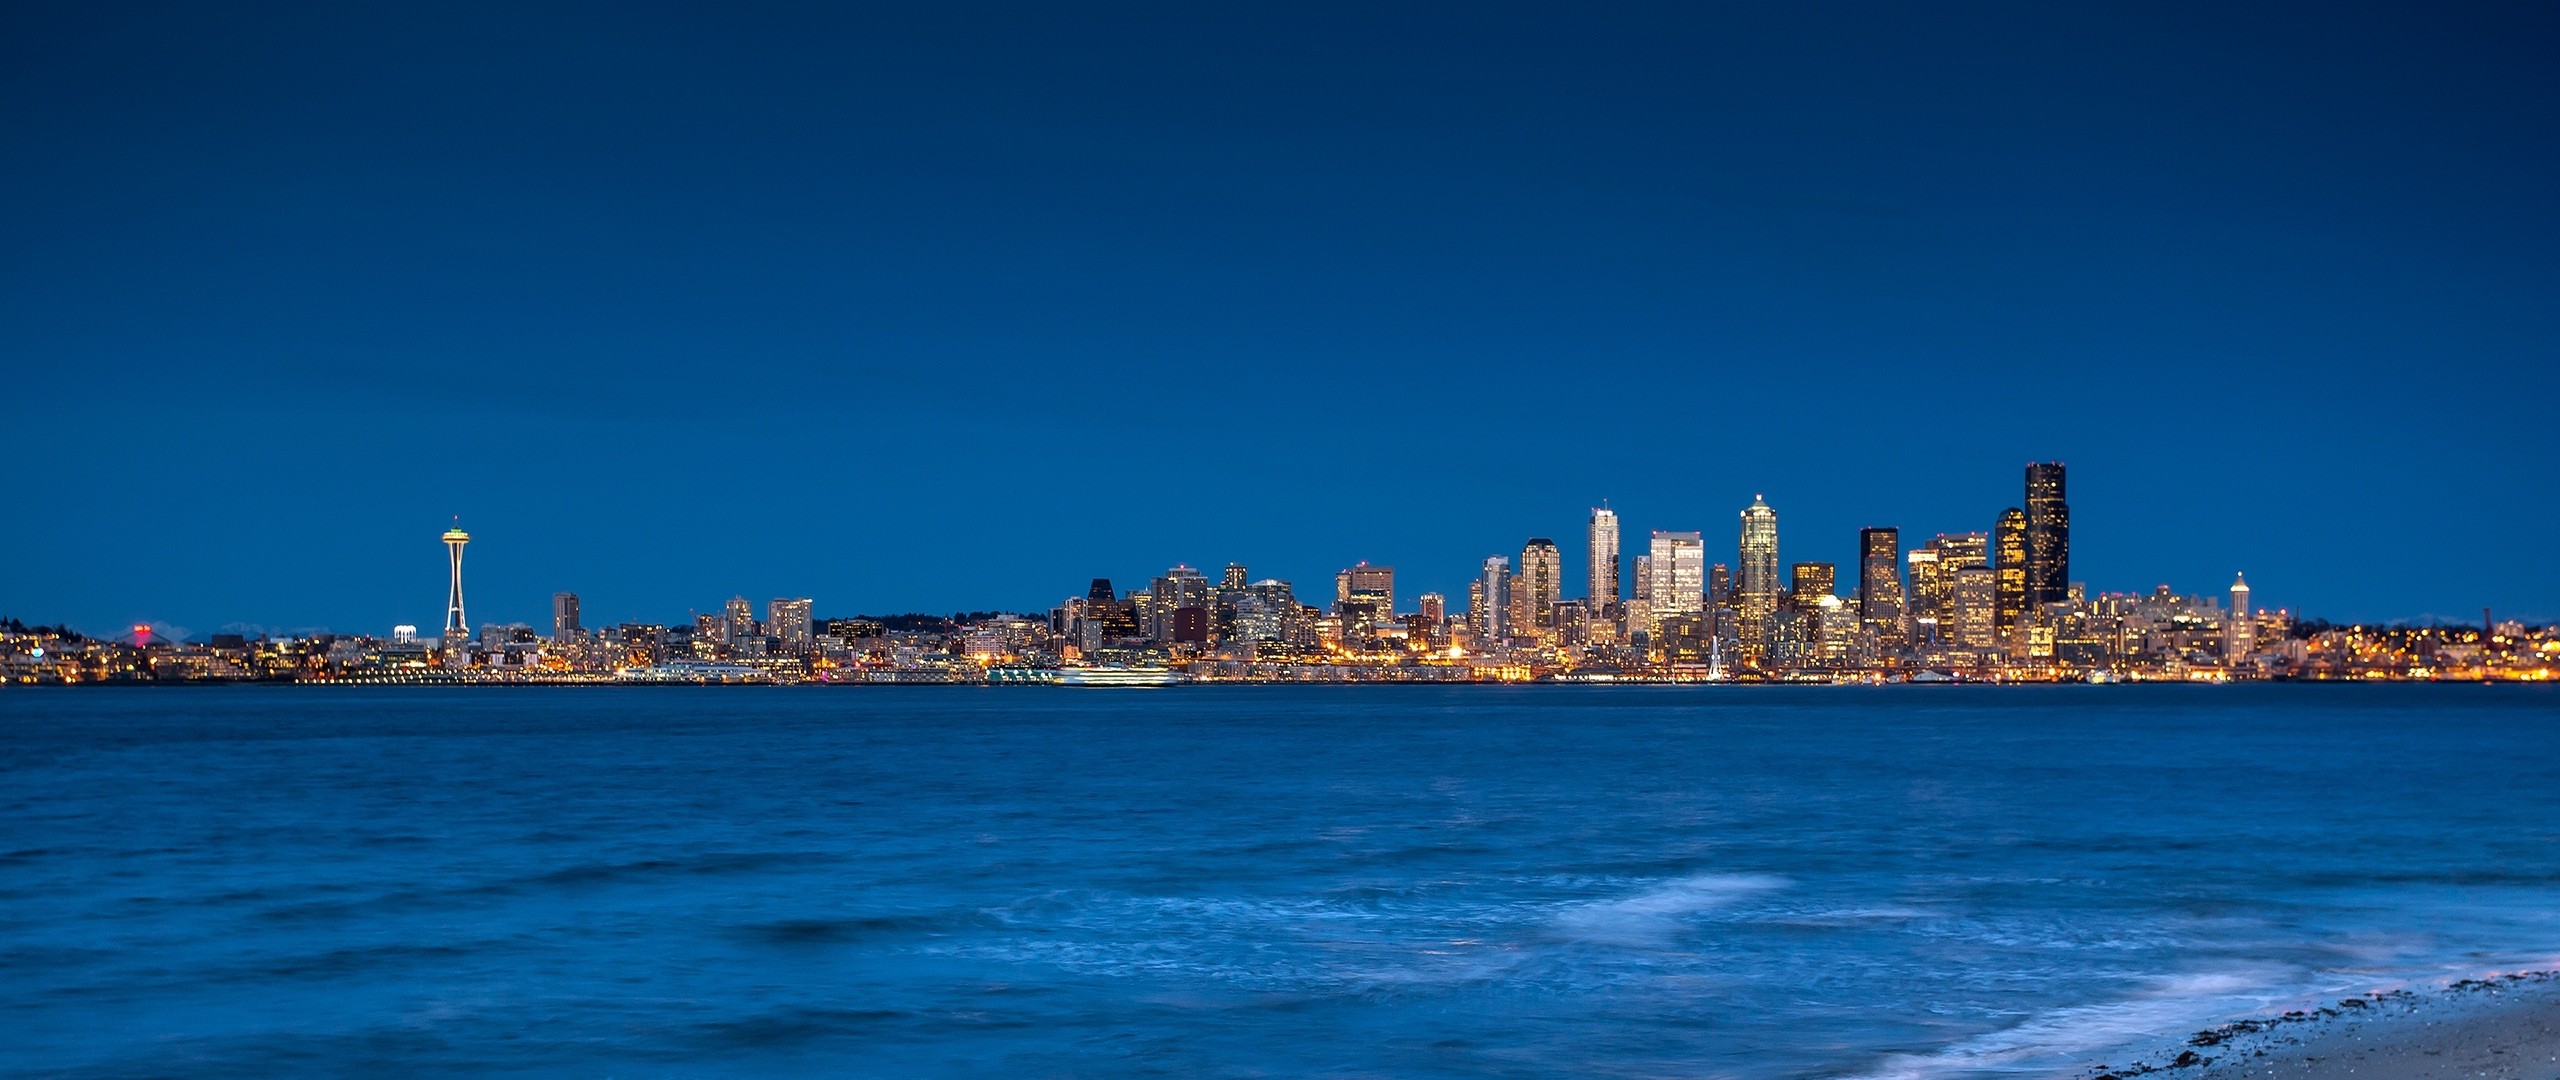 2560x1080 Seattle Wallpaper Travel screenshot Source Â· Download Wallpaper   Seattle City Sea Sky  21